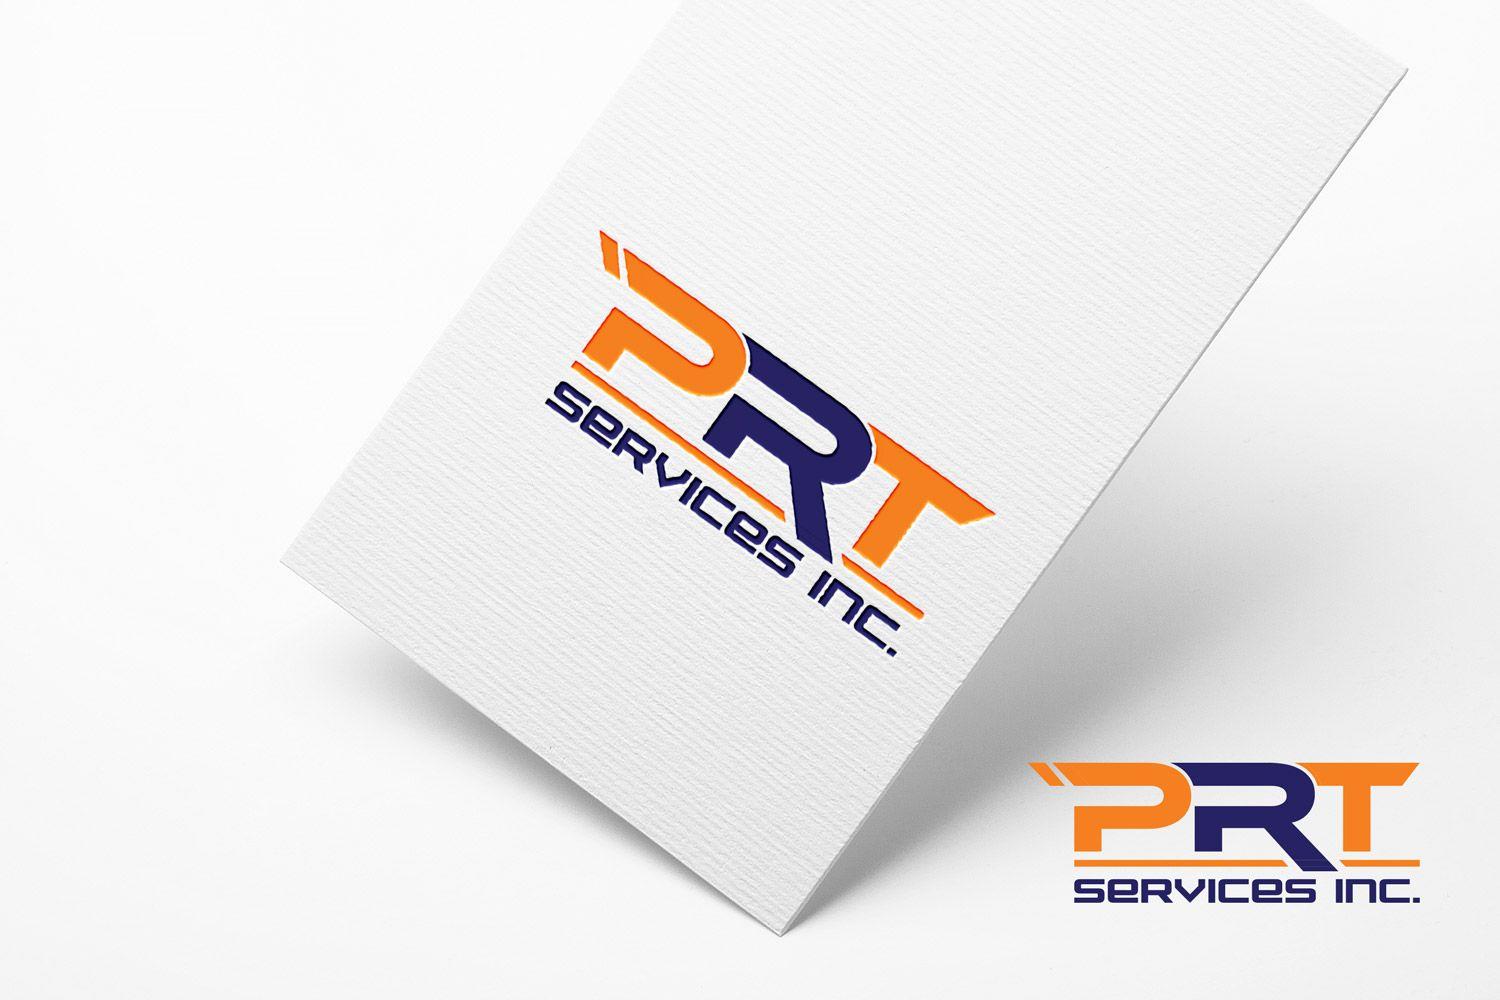 PRT Logo - Bold, Modern, Industrial Logo Design for PRT Services Inc. by Locke ...